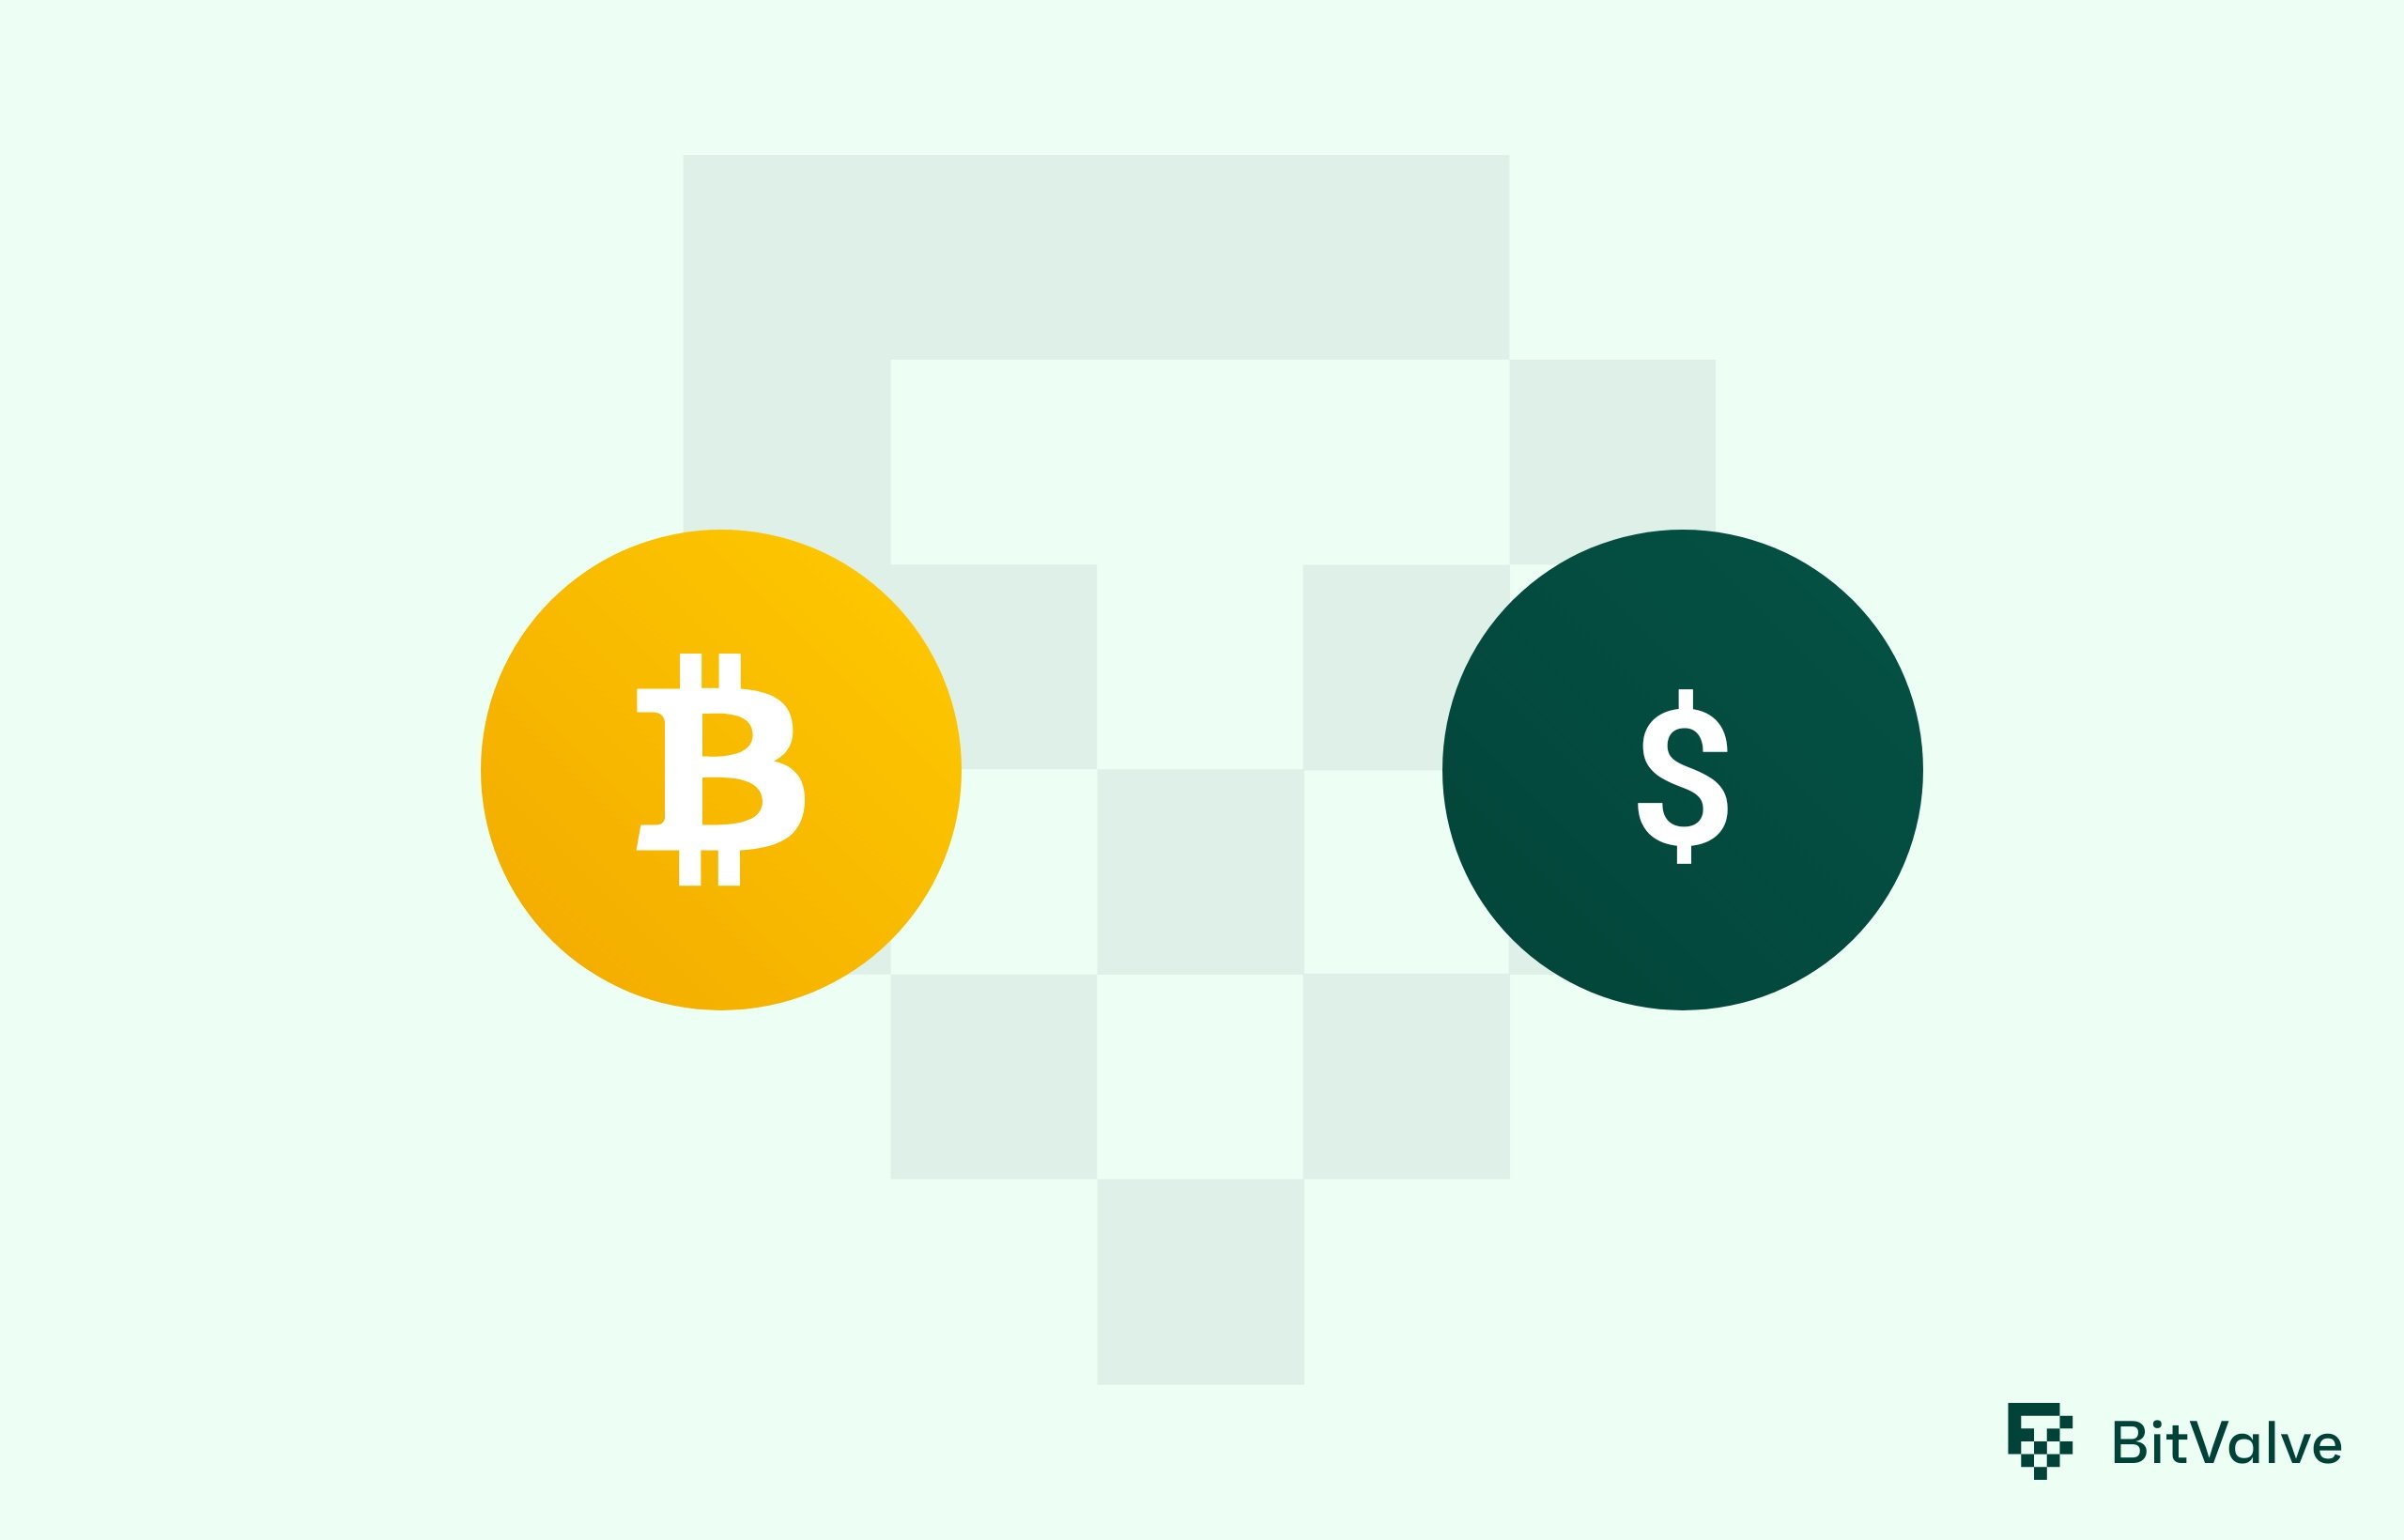 ETH to USD (Ethereum to Dollar) - BitcoinsPrice